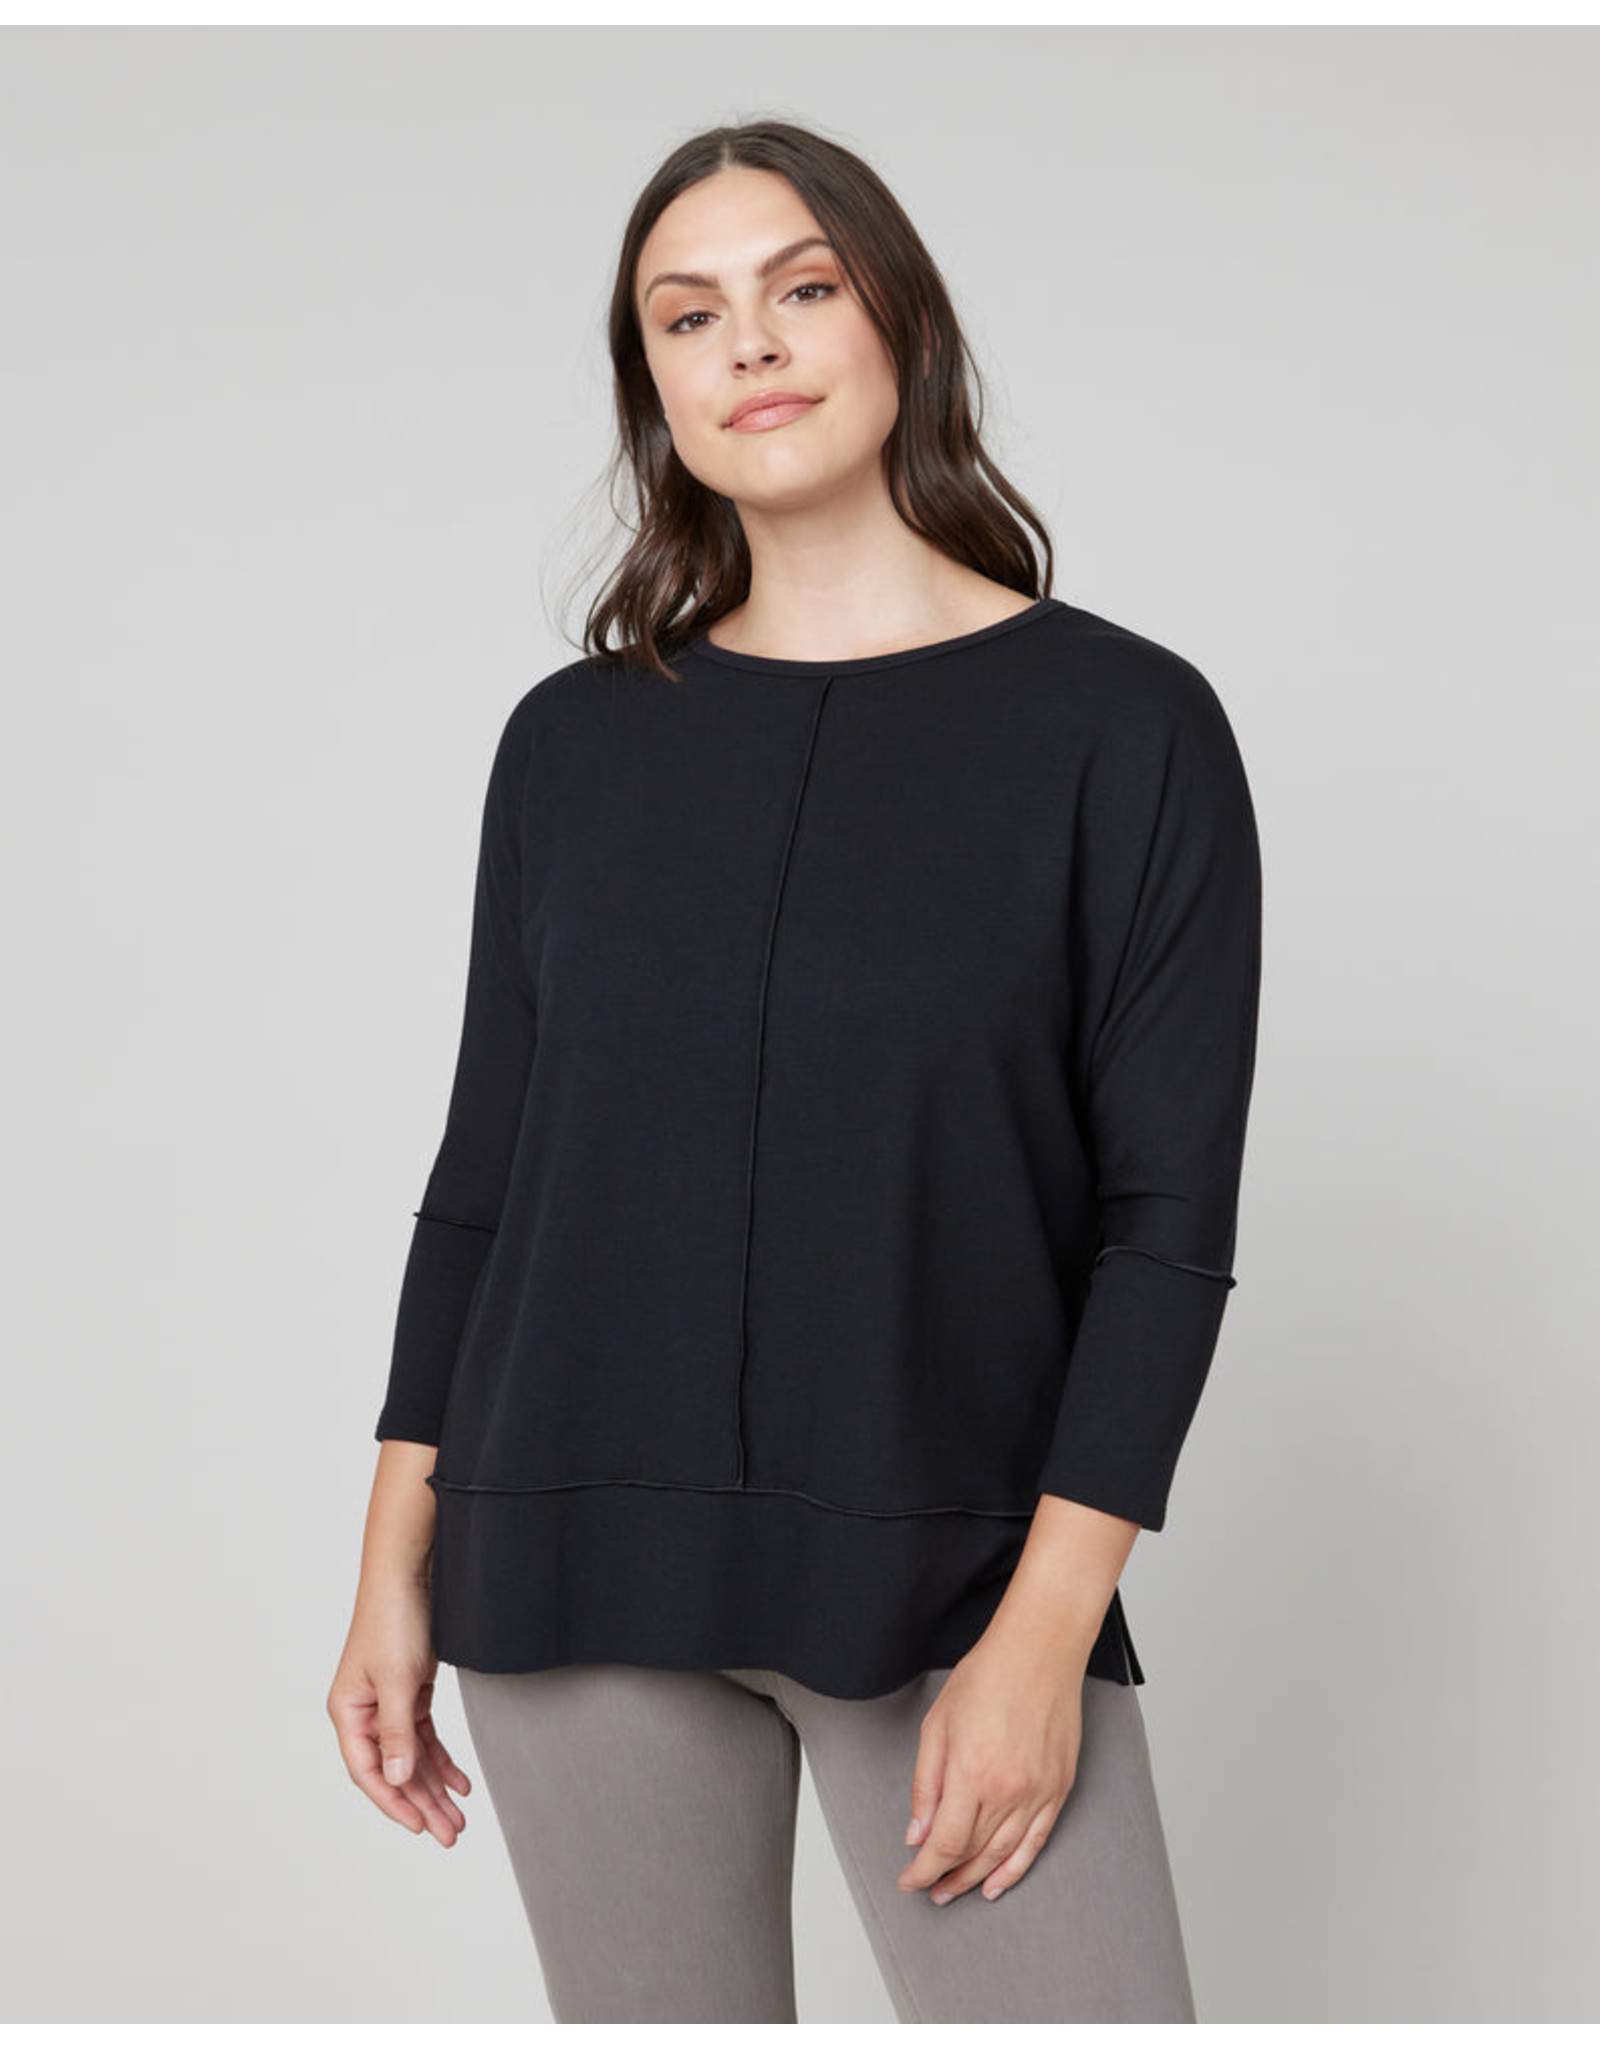 Spanx Black Long Sleeve Shirt Women's Size Medium